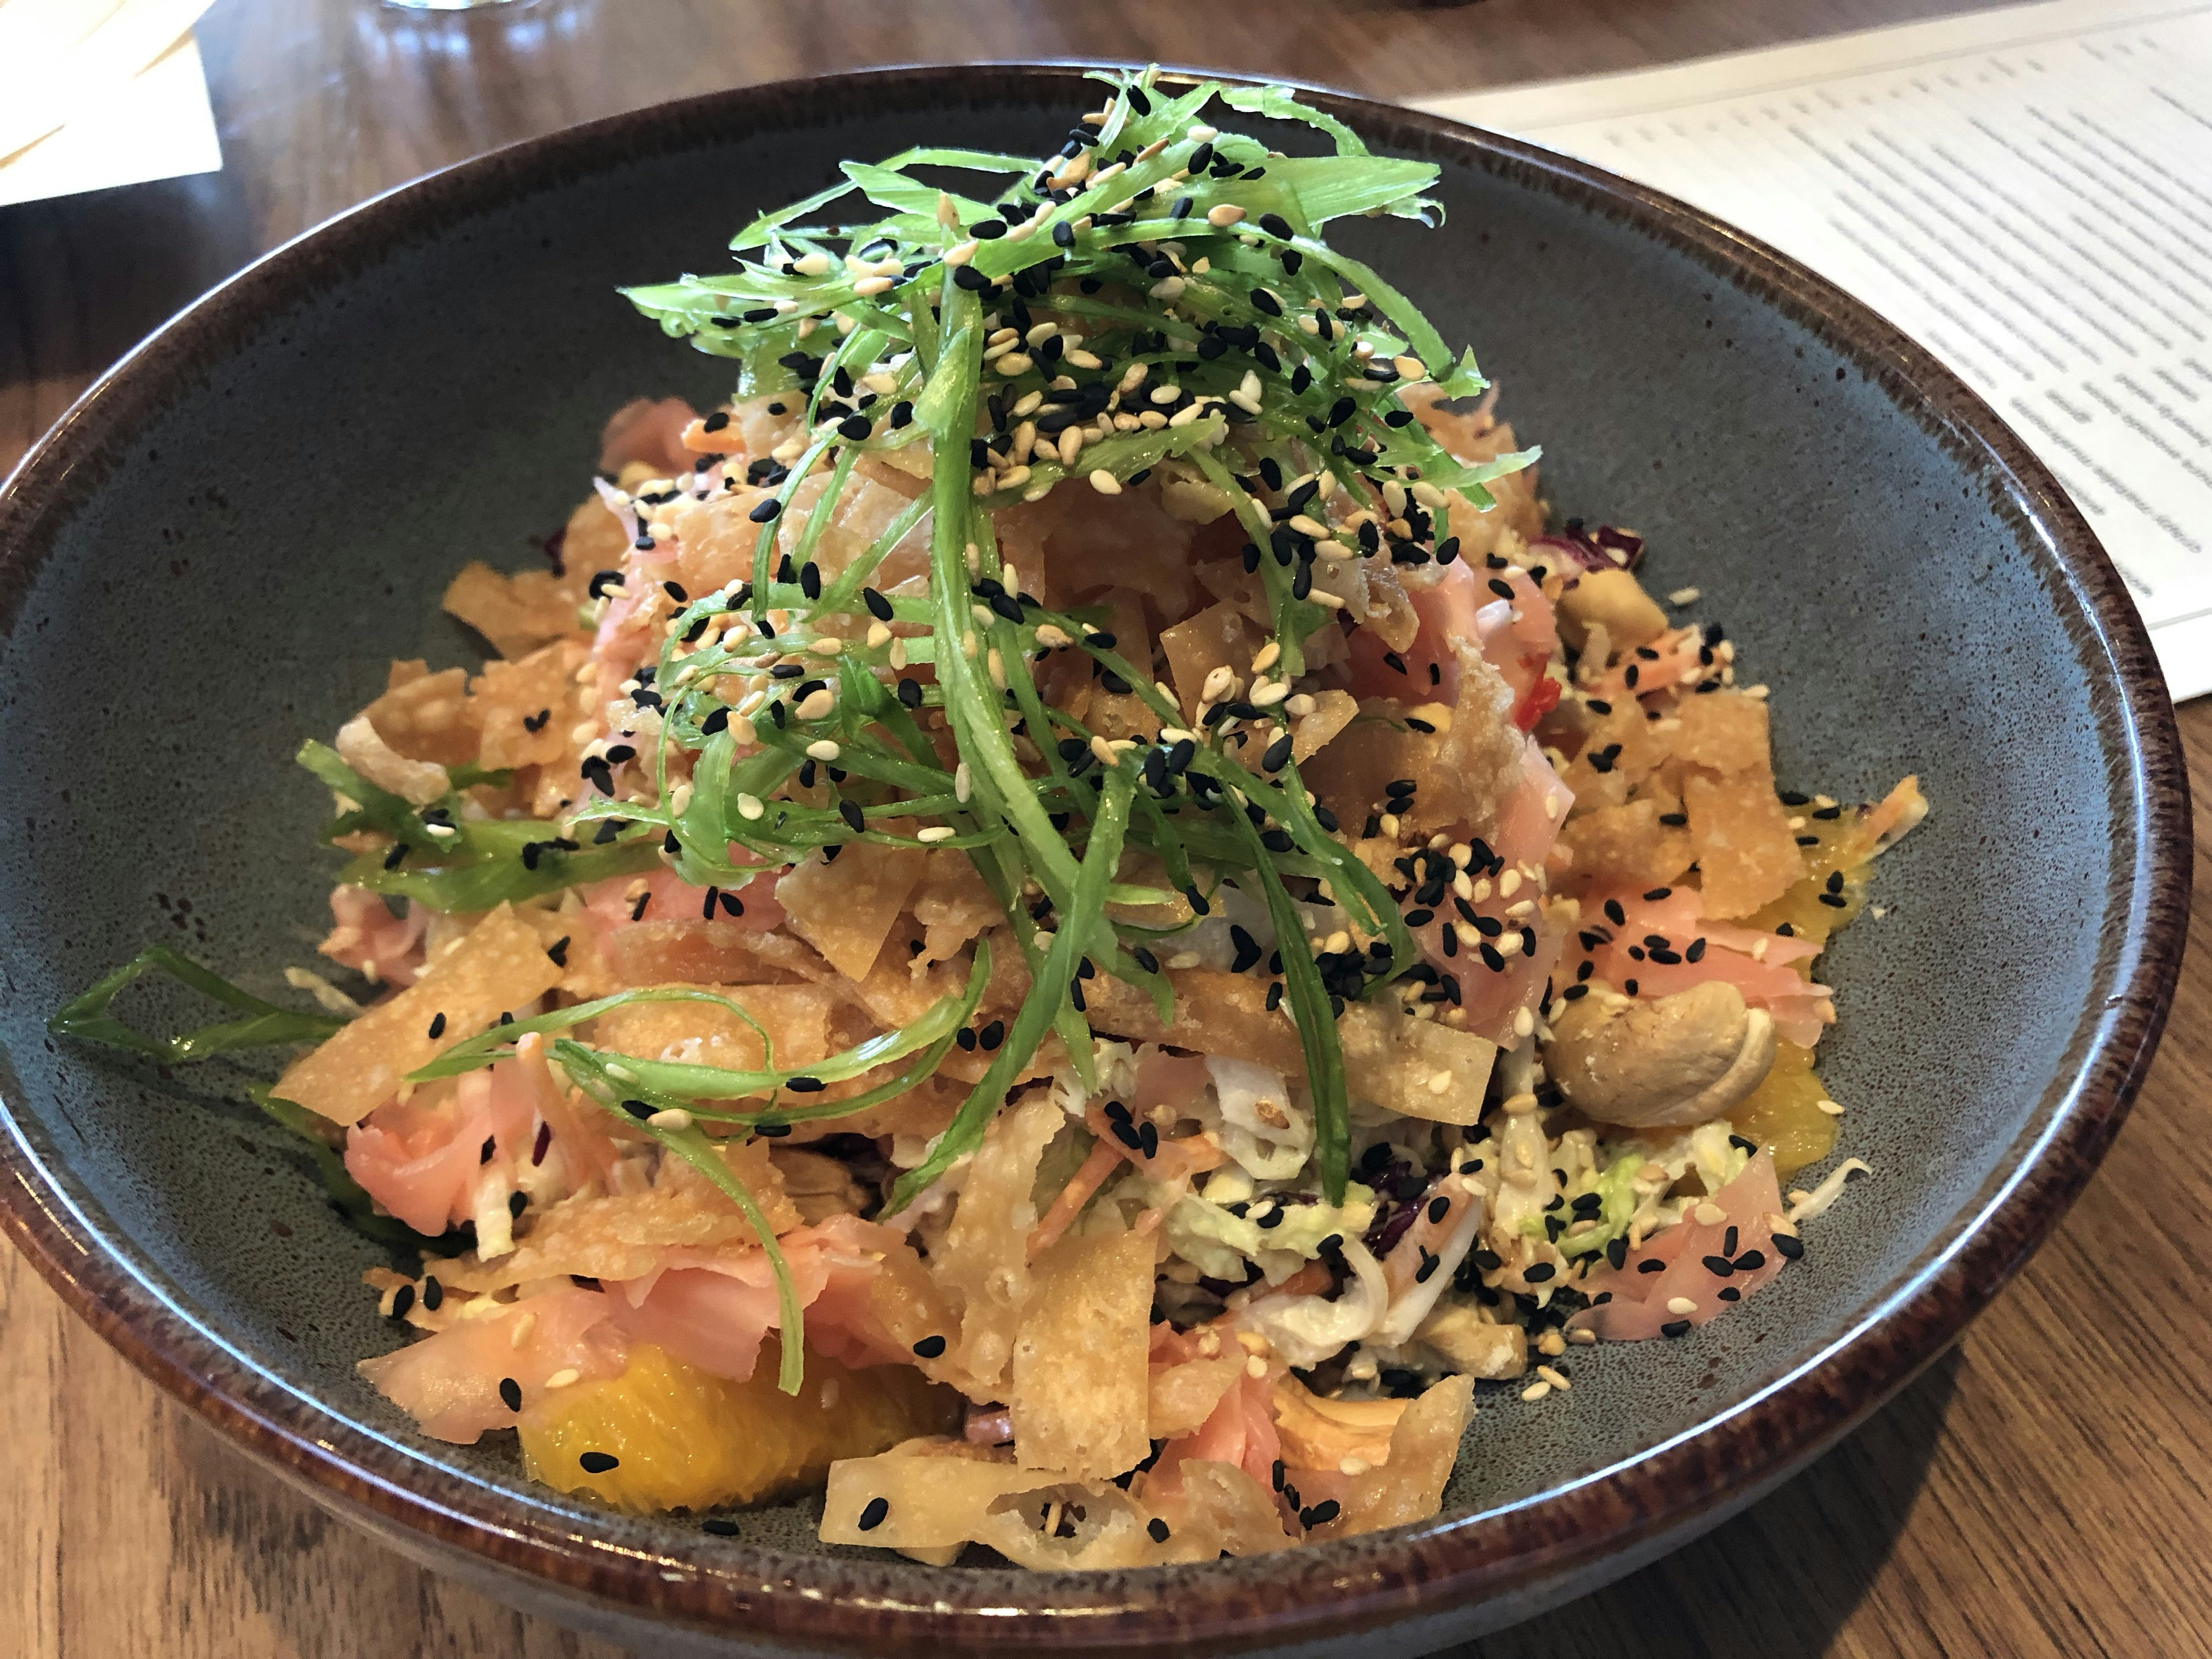 Plate piled high with shredded vegan chicken, friend wonton, cabbage and sesame seeds; LA vegan restaurants 